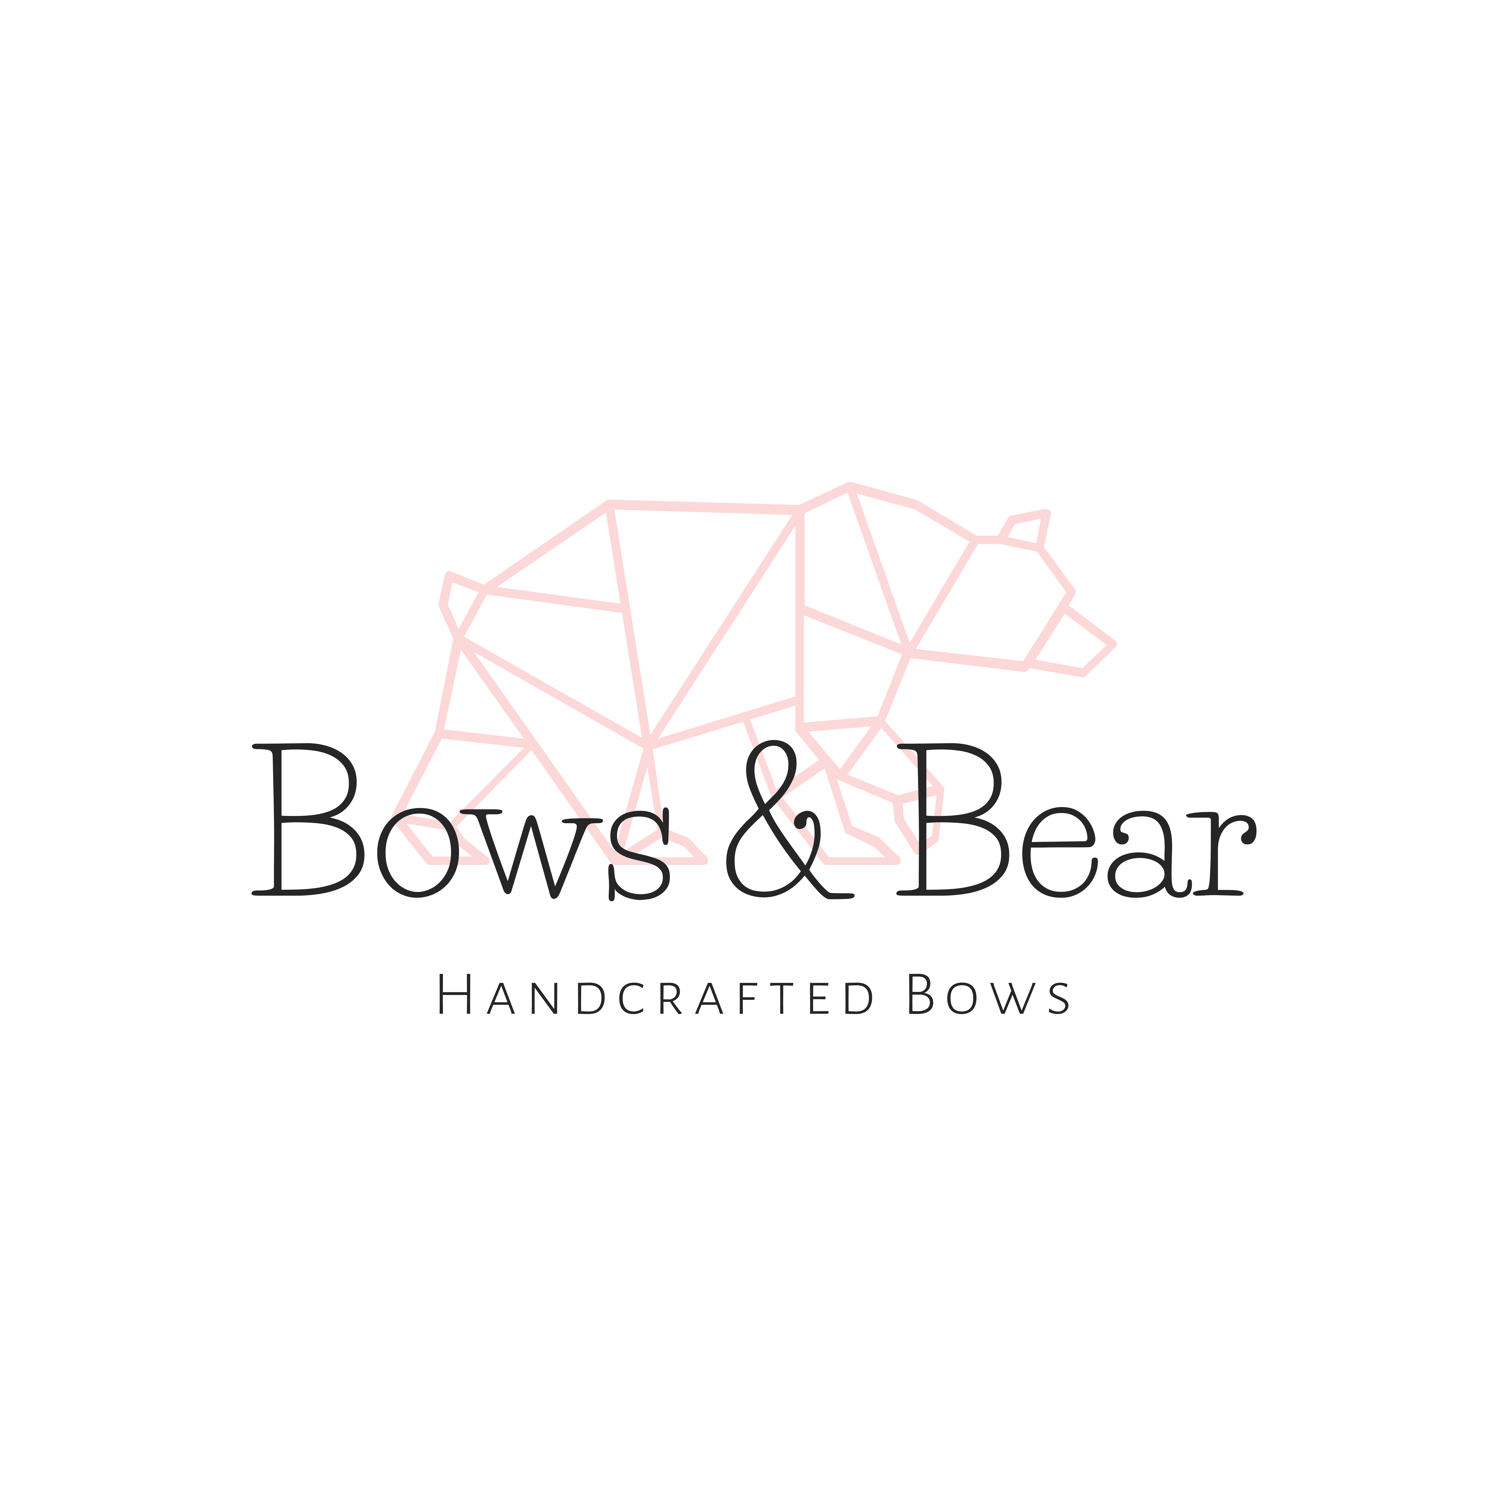 Bows & Bear